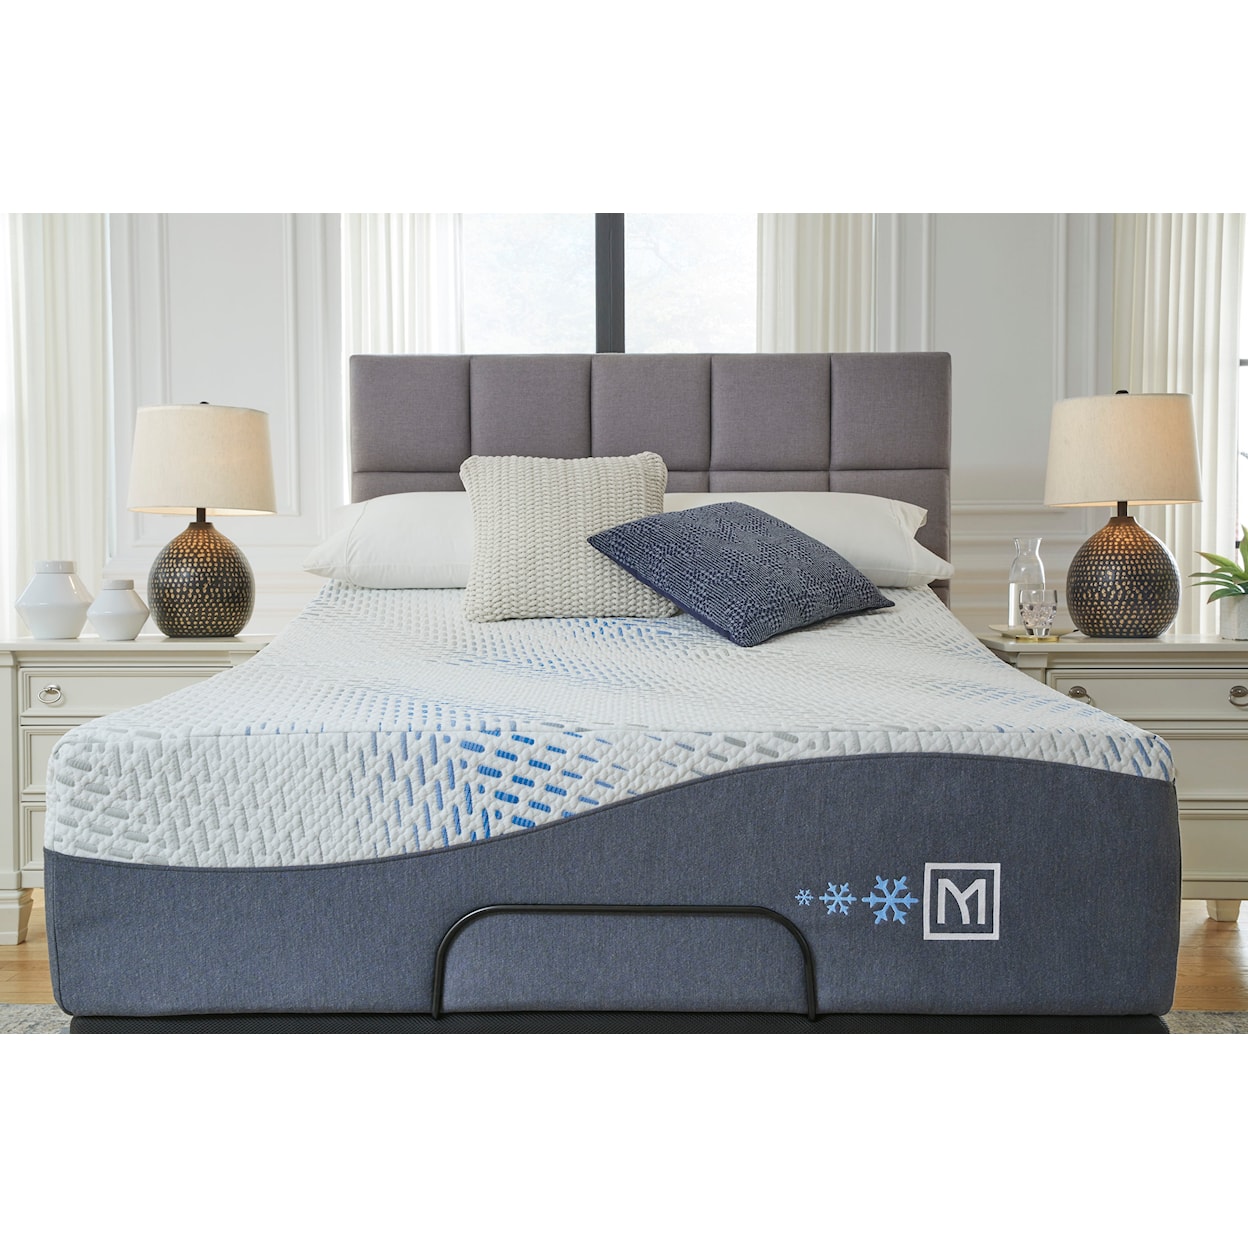 Sierra Sleep Millennium Luxury Gel Memory Foam Twin XL Cushion Firm Mattress